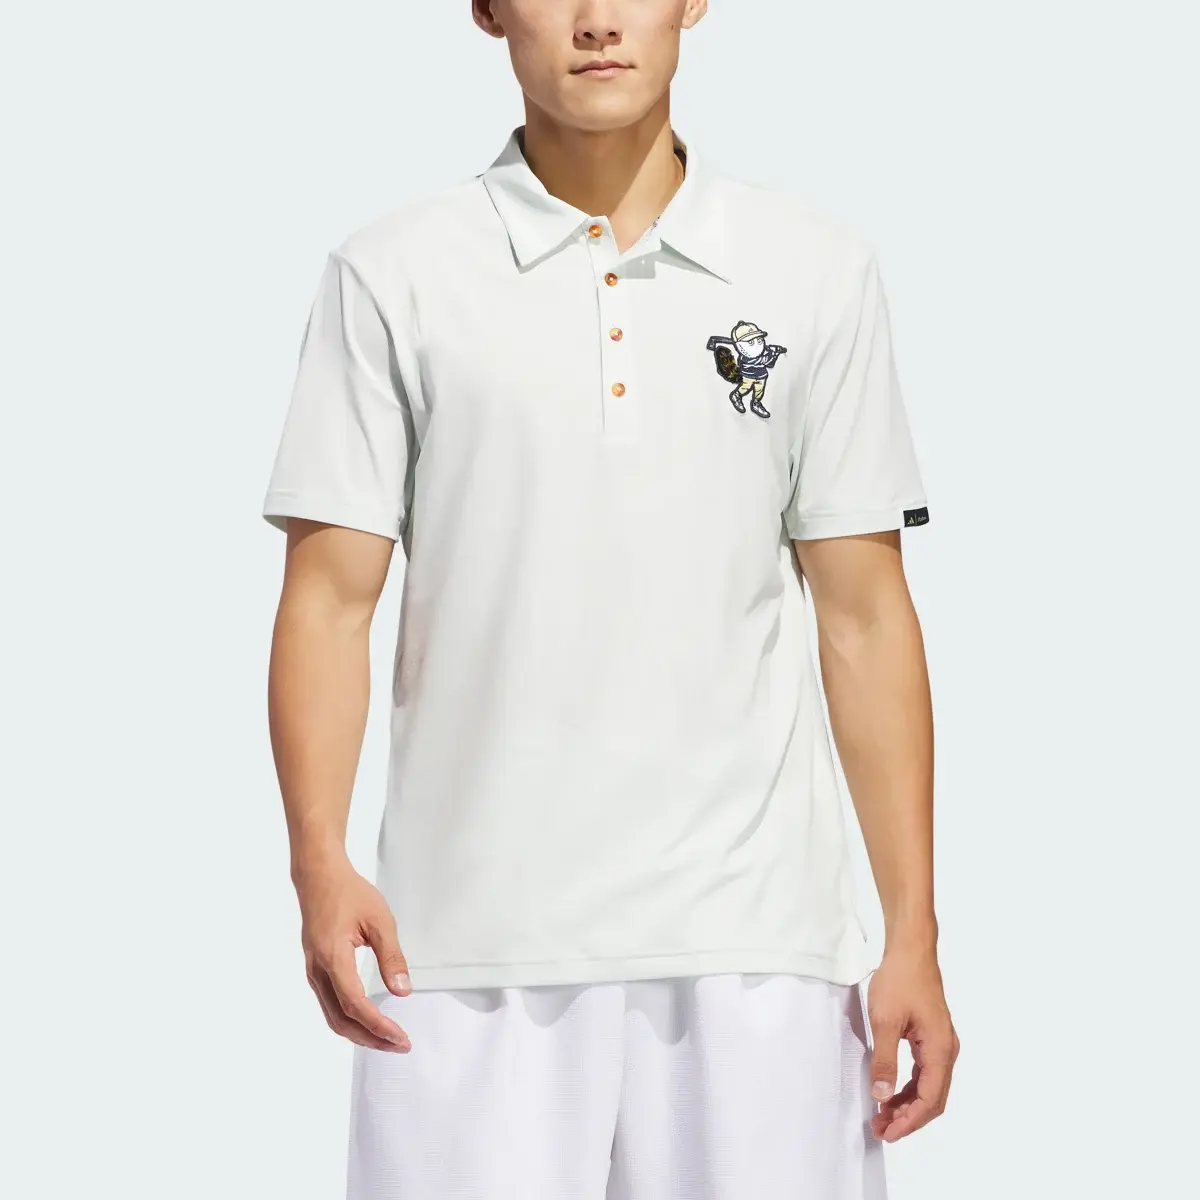 Adidas x Malbon Polo Shirt. 1